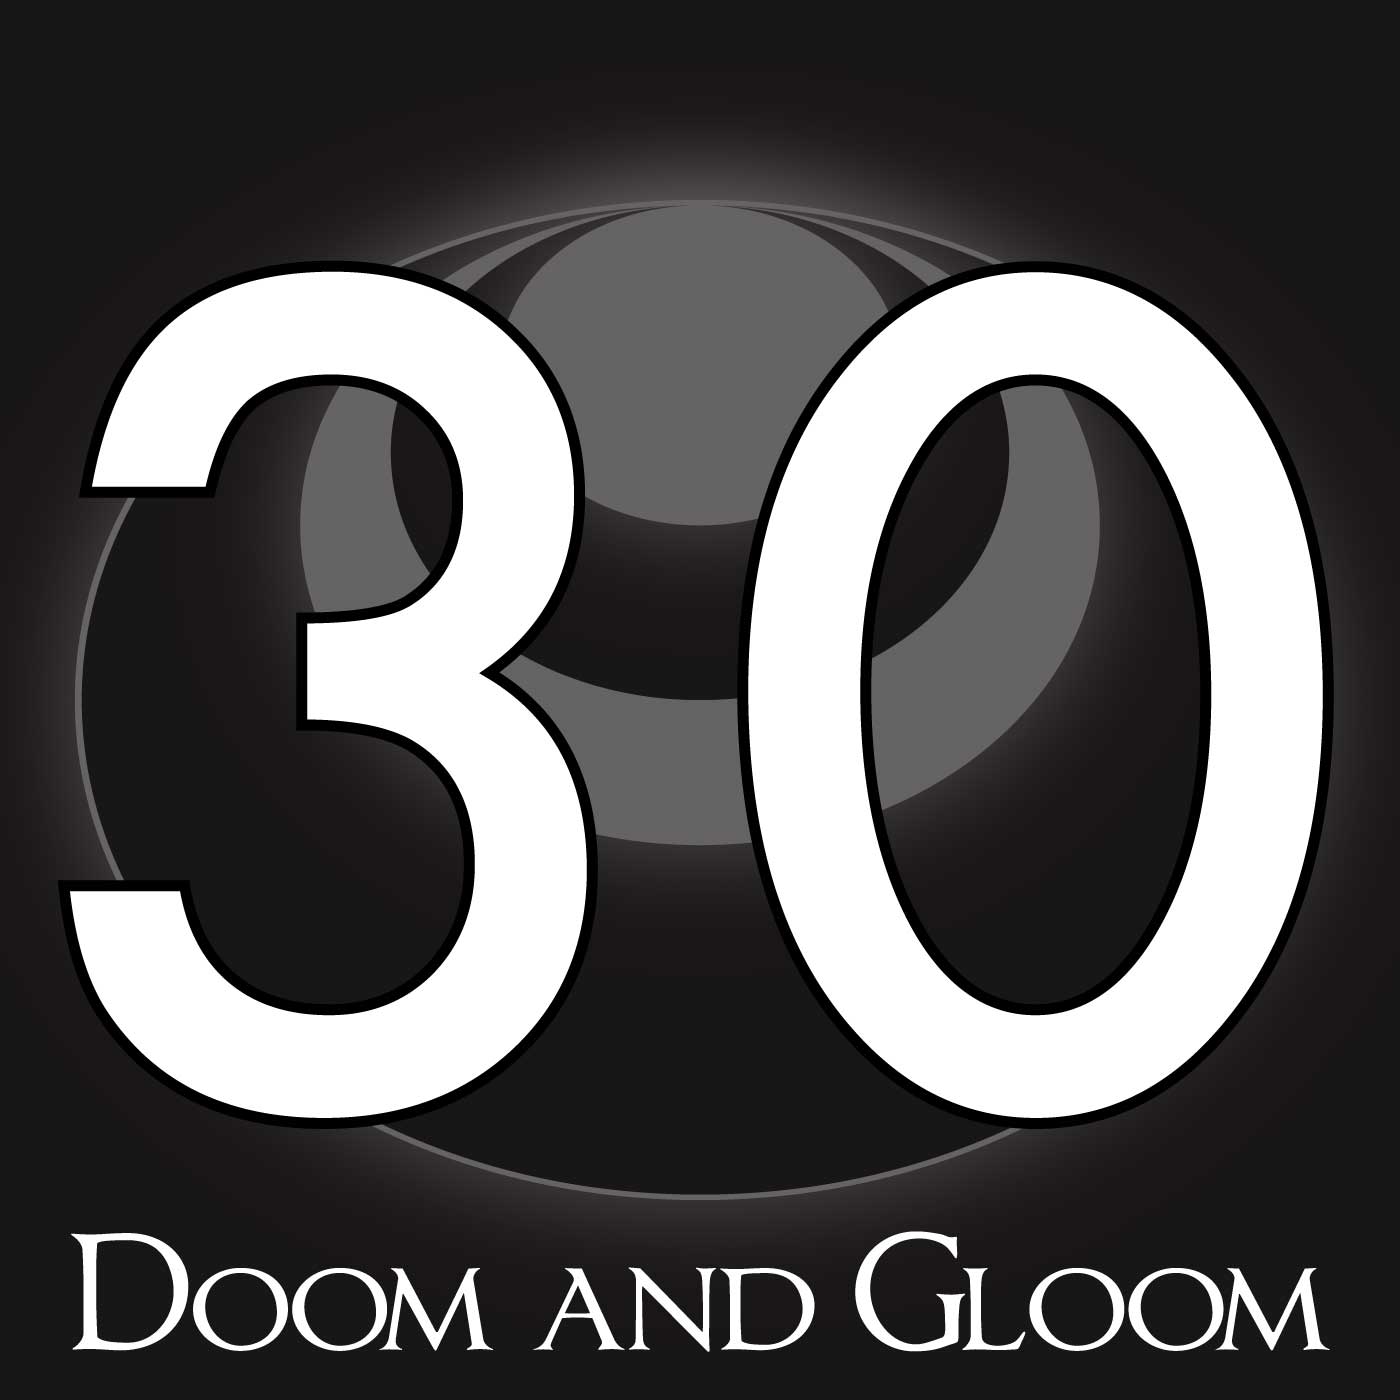 30 – Doom and Gloom